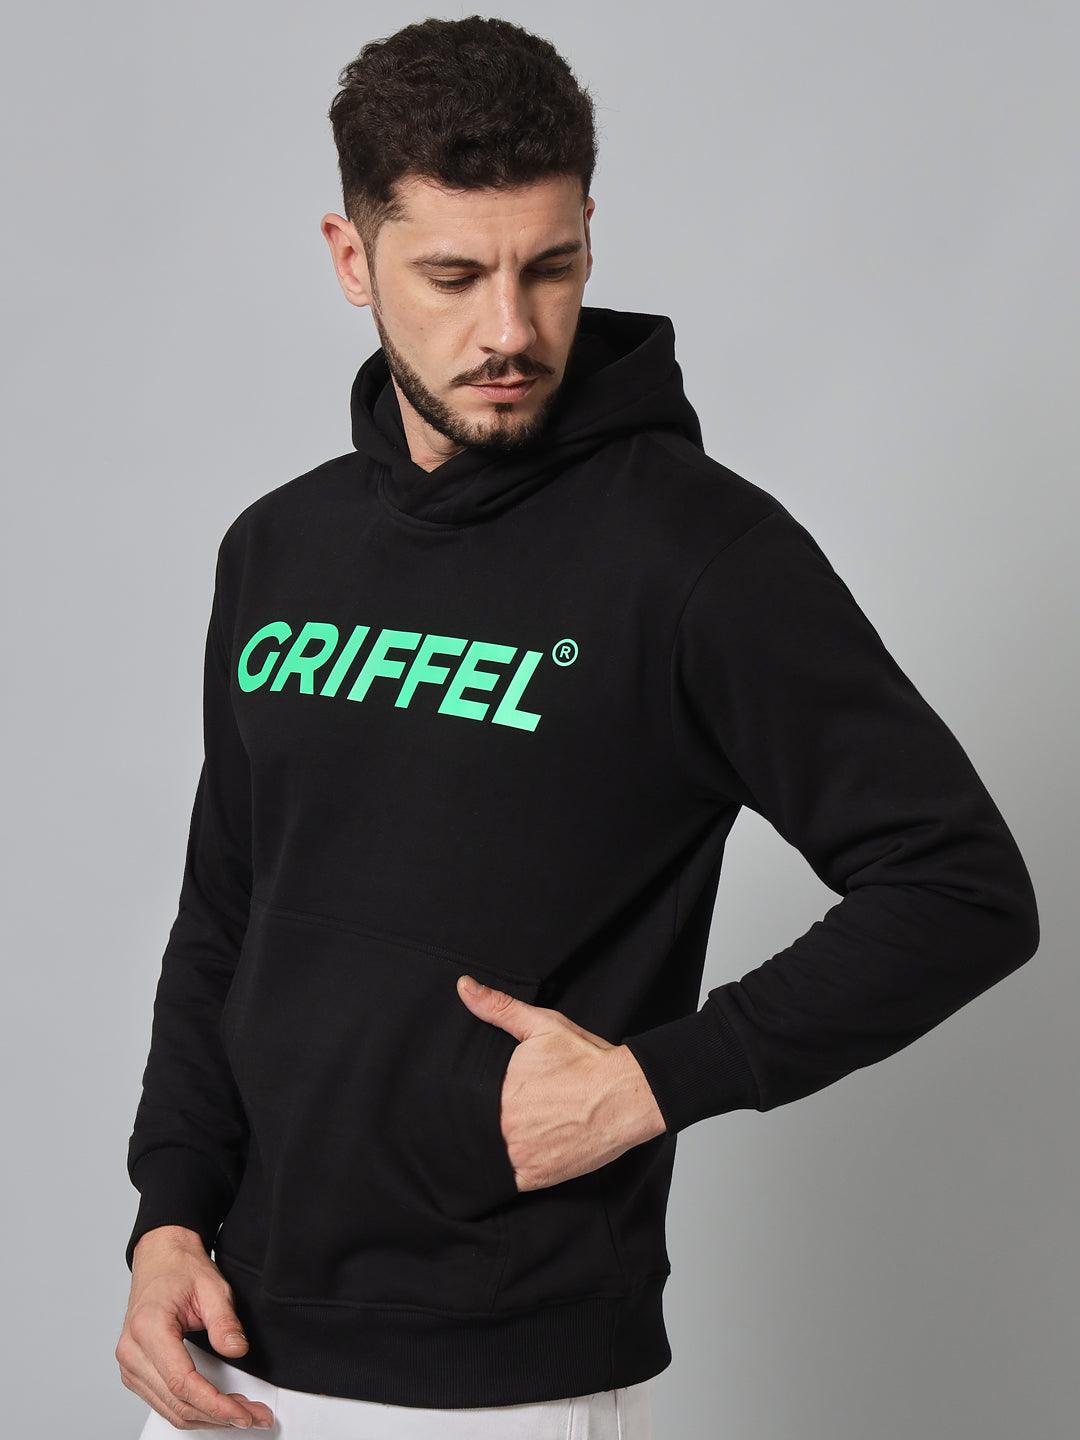 Griffel Men's Black Cotton Front Logo Fleece Hoody Sweatshirt with Full Sleeve - griffel